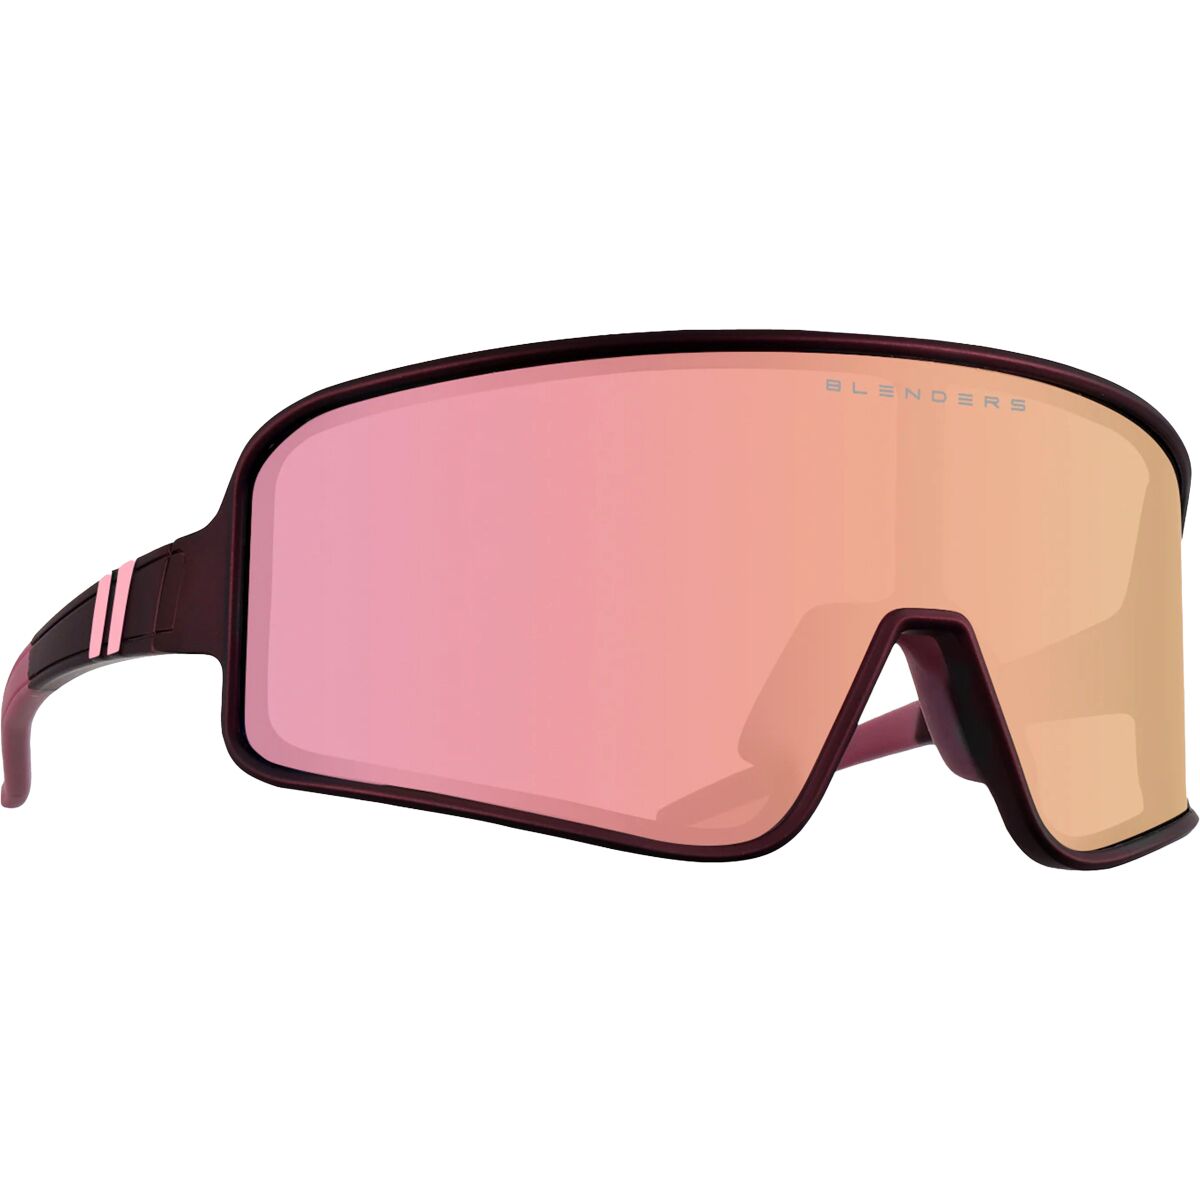 Blenders Eyewear Rose Rocket Eclipse Polarized Sunglasses